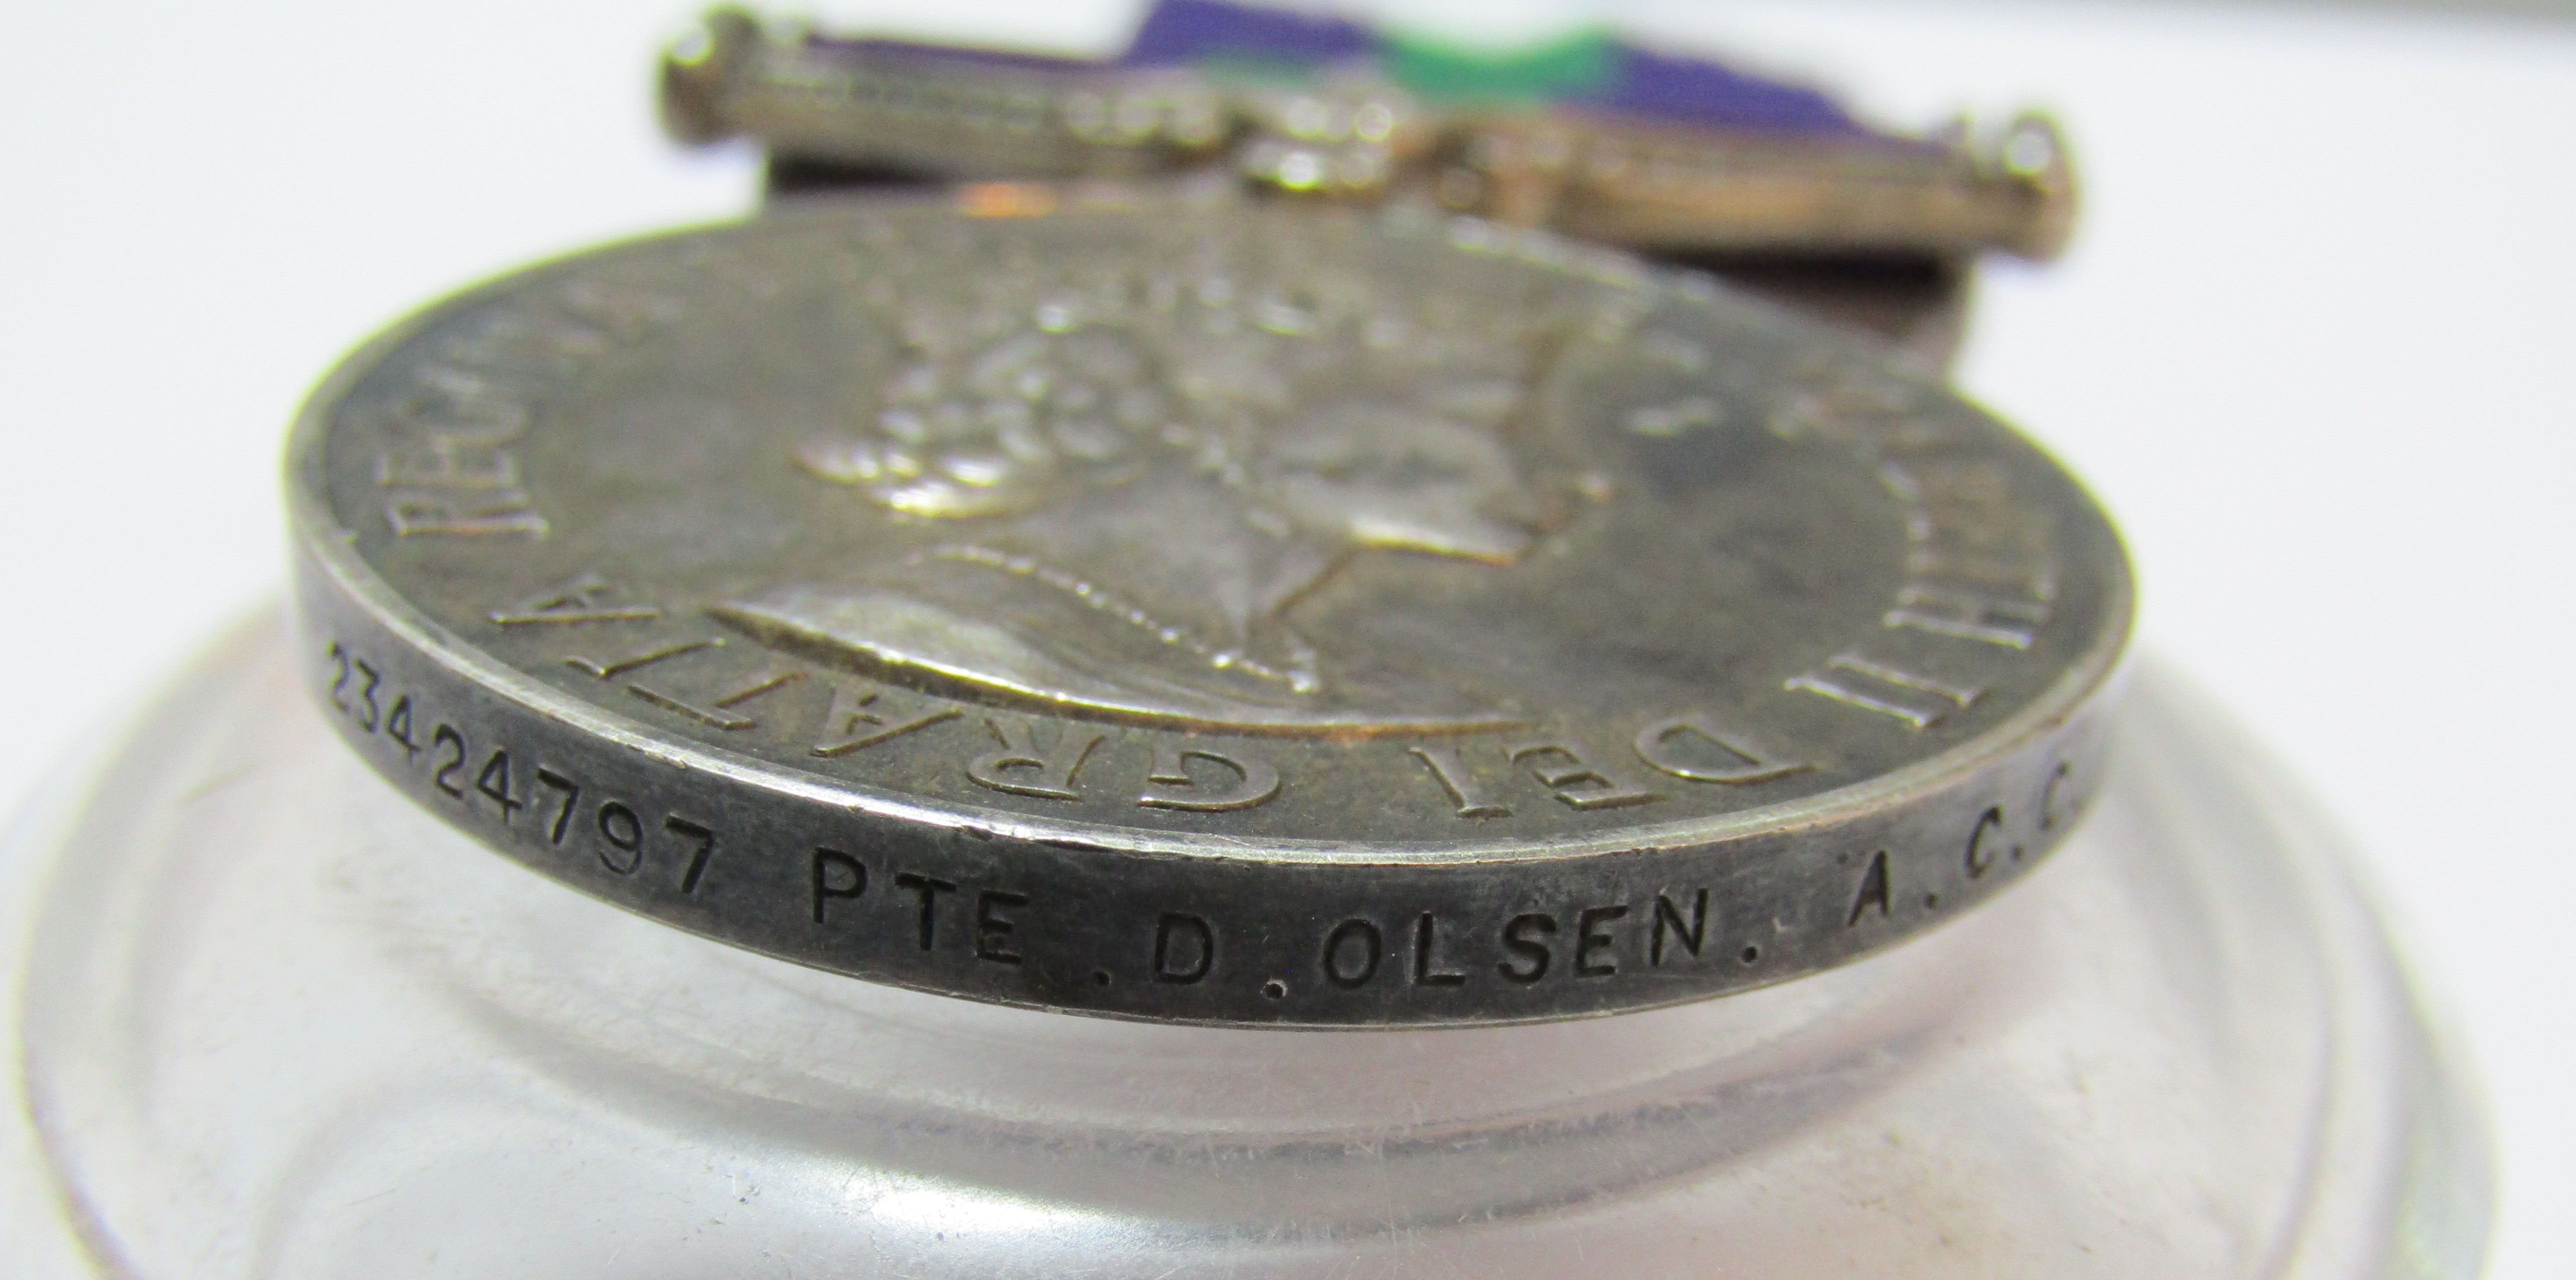 Elizabeth II Cyprus medal - 23424797 PTE D OLSEN A.C.C - with purple and green ribbon - Bild 5 aus 6